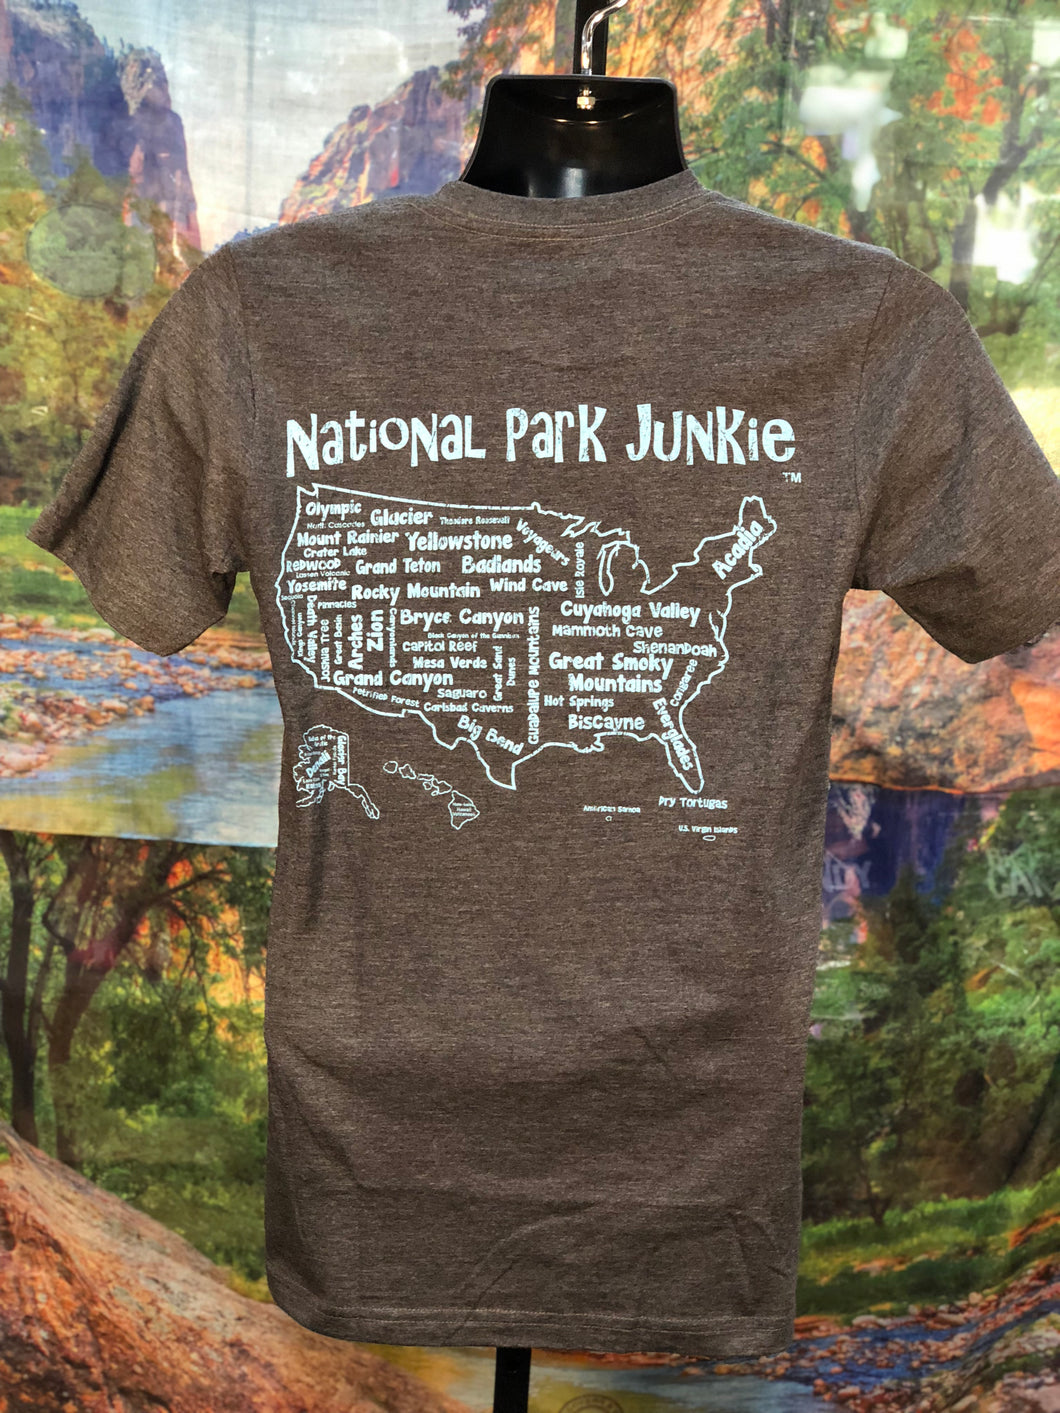 40% OFF SALE National Park Junkie T-Shirt*